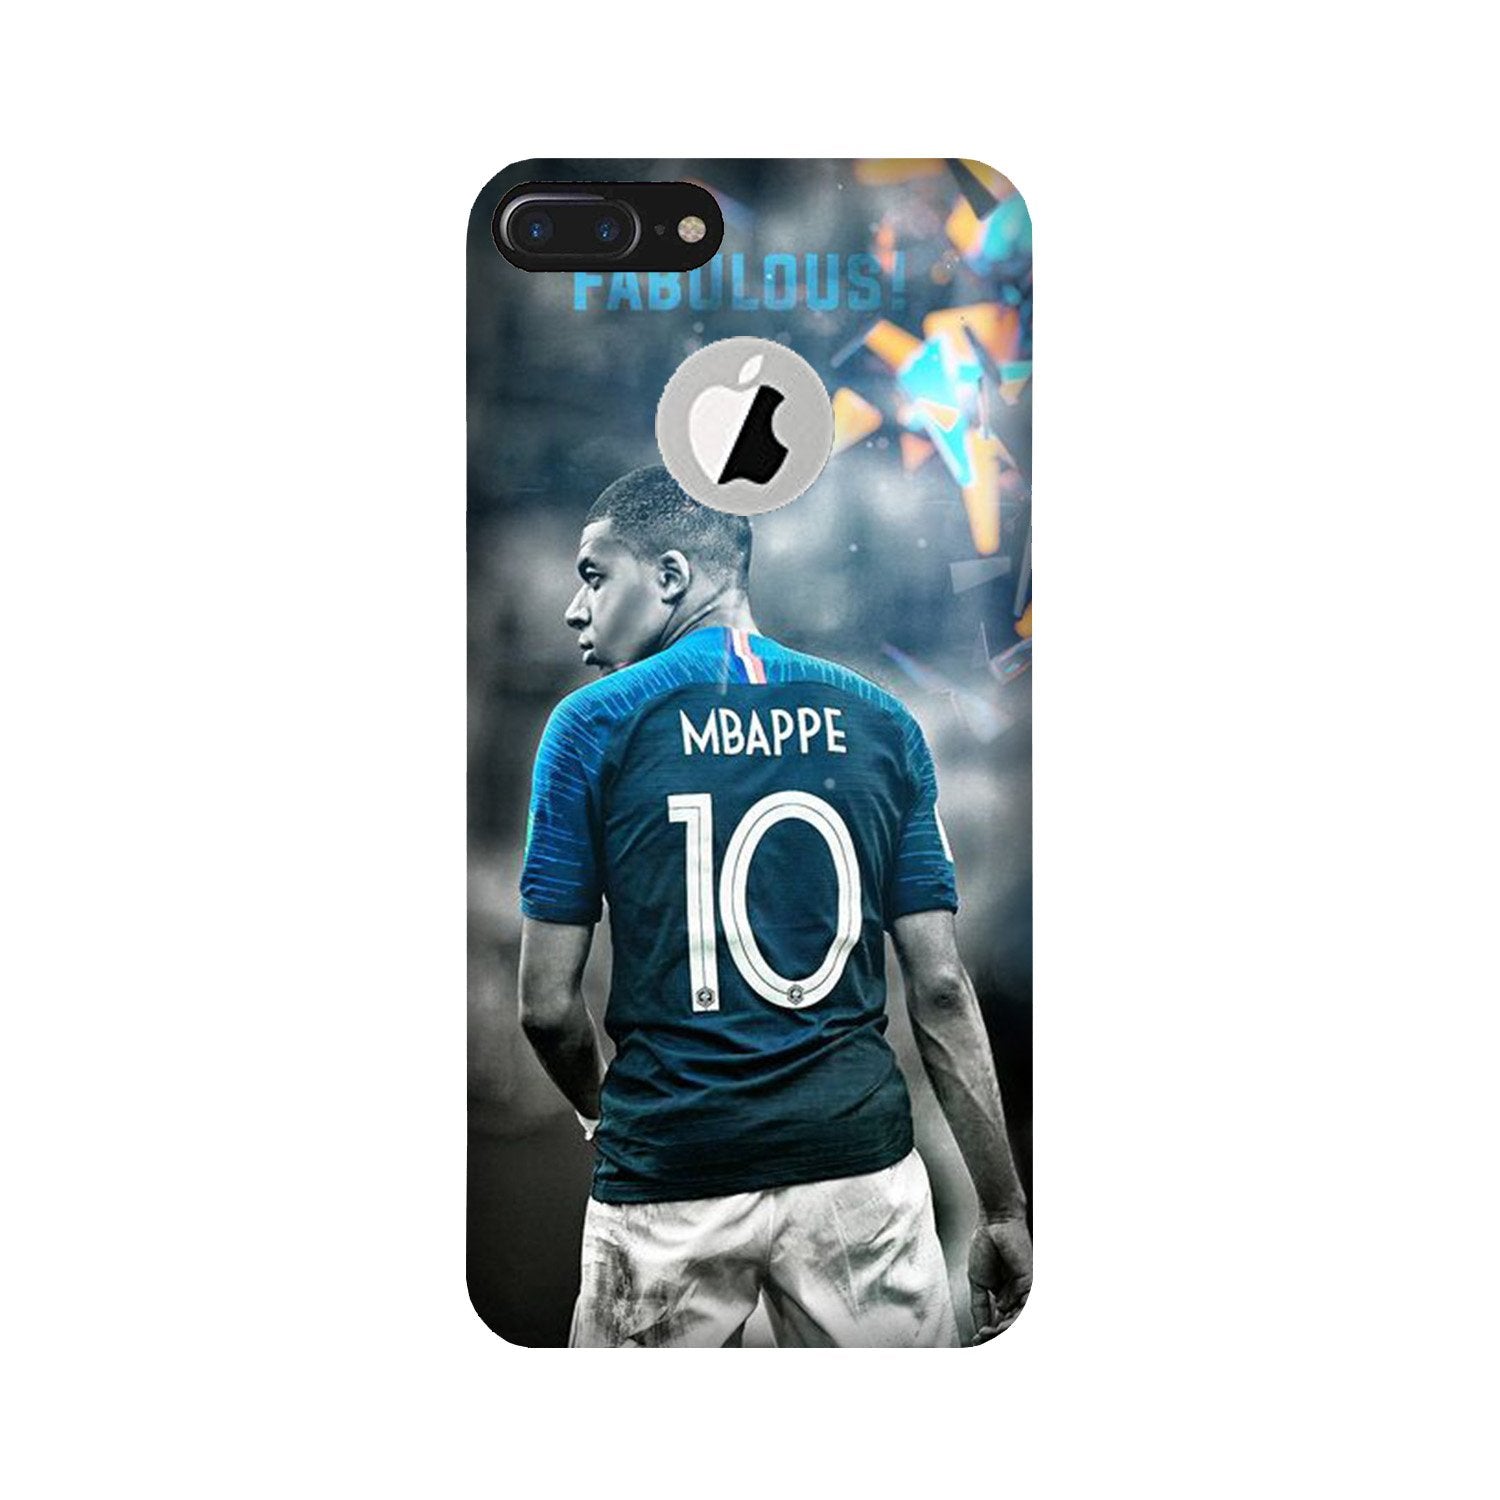 Mbappe Case for iPhone 7 Plus logo cut(Design - 170)